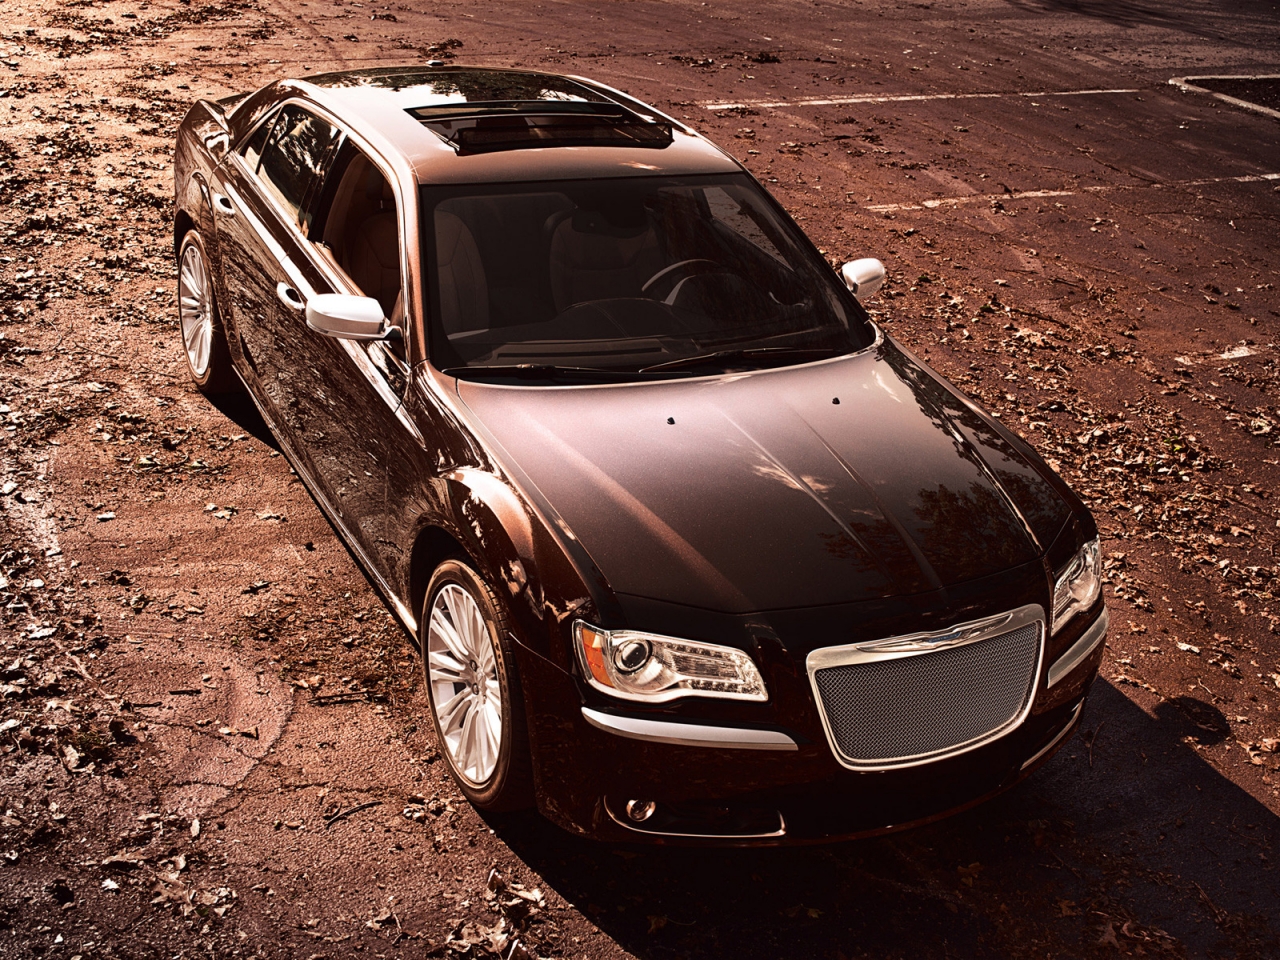 2012 Chrysler 300 Luxury Series for 1280 x 960 resolution